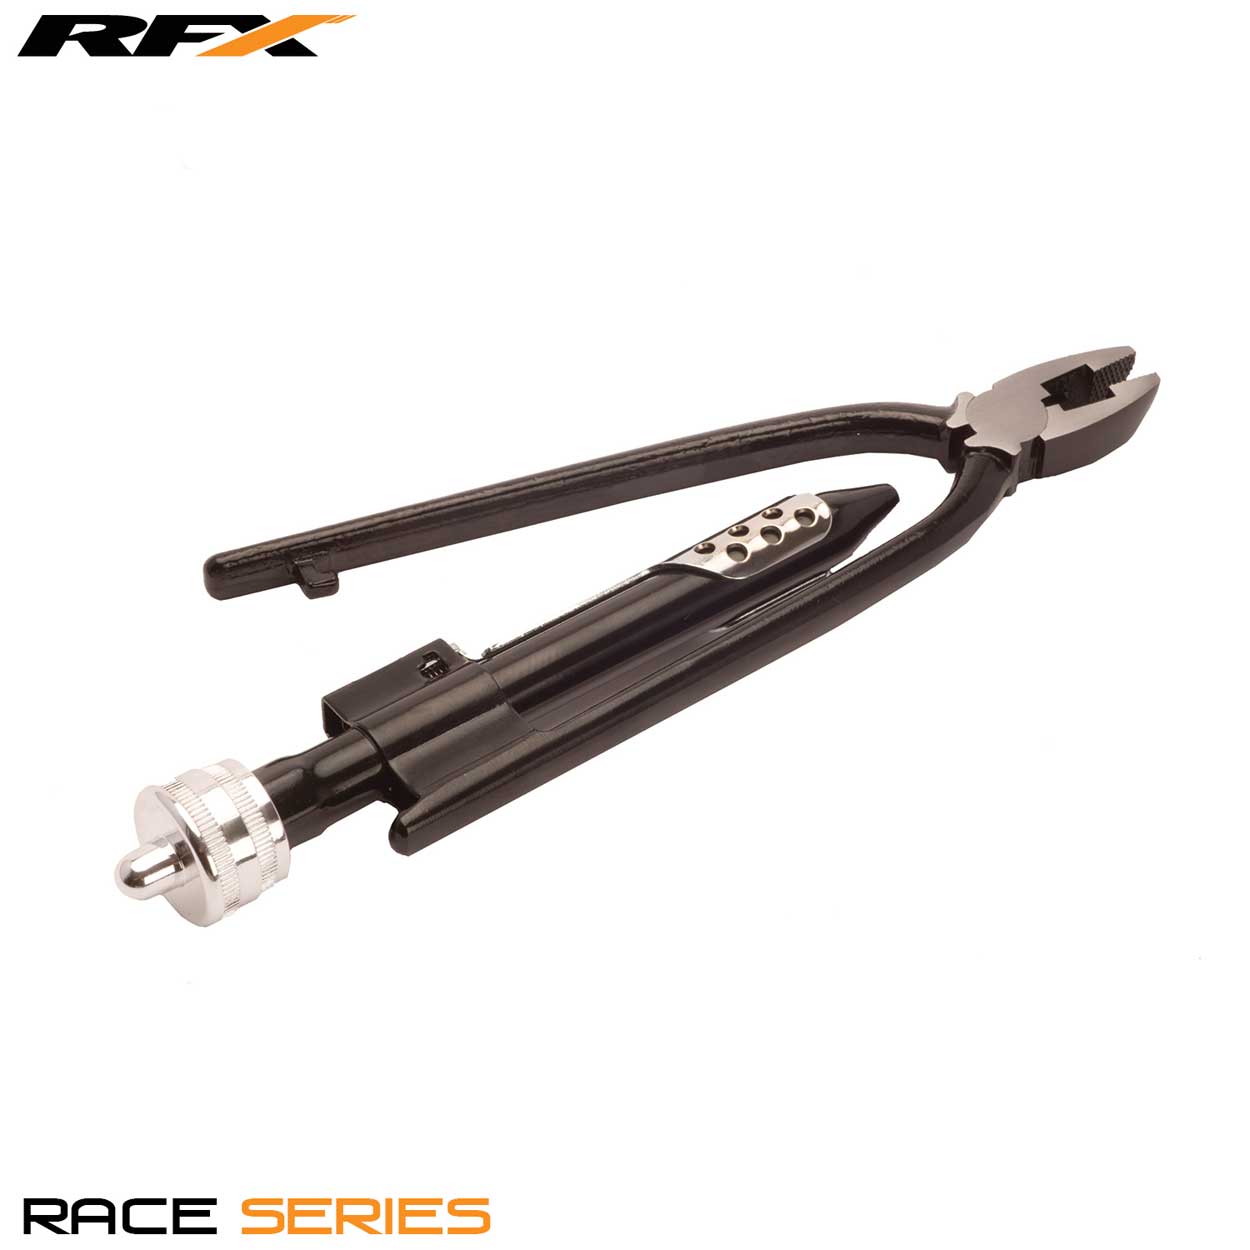 RFX Race Safety Wire Pliers (Black) Universal Standard size - Black - RFX